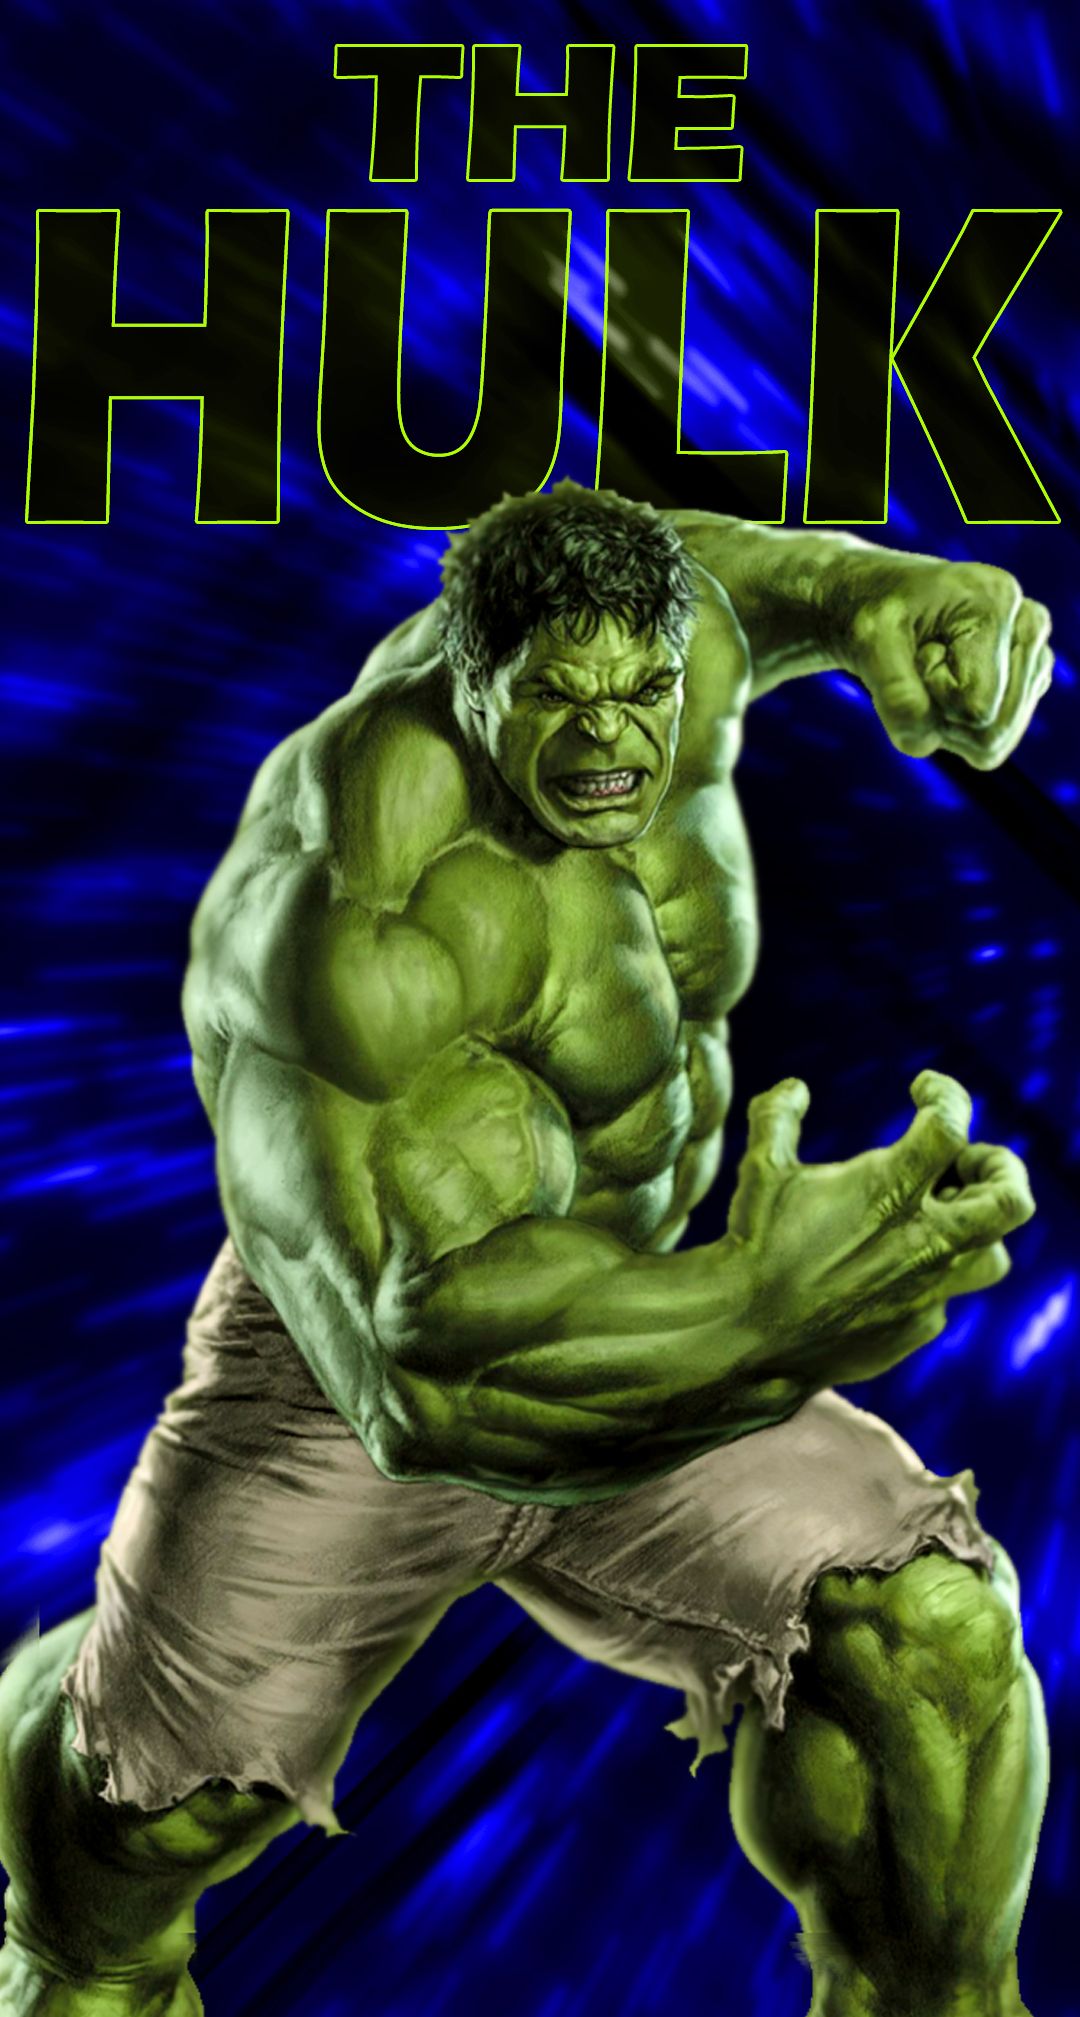 29+] Hulk HD Wallpapers on WallpaperSafari